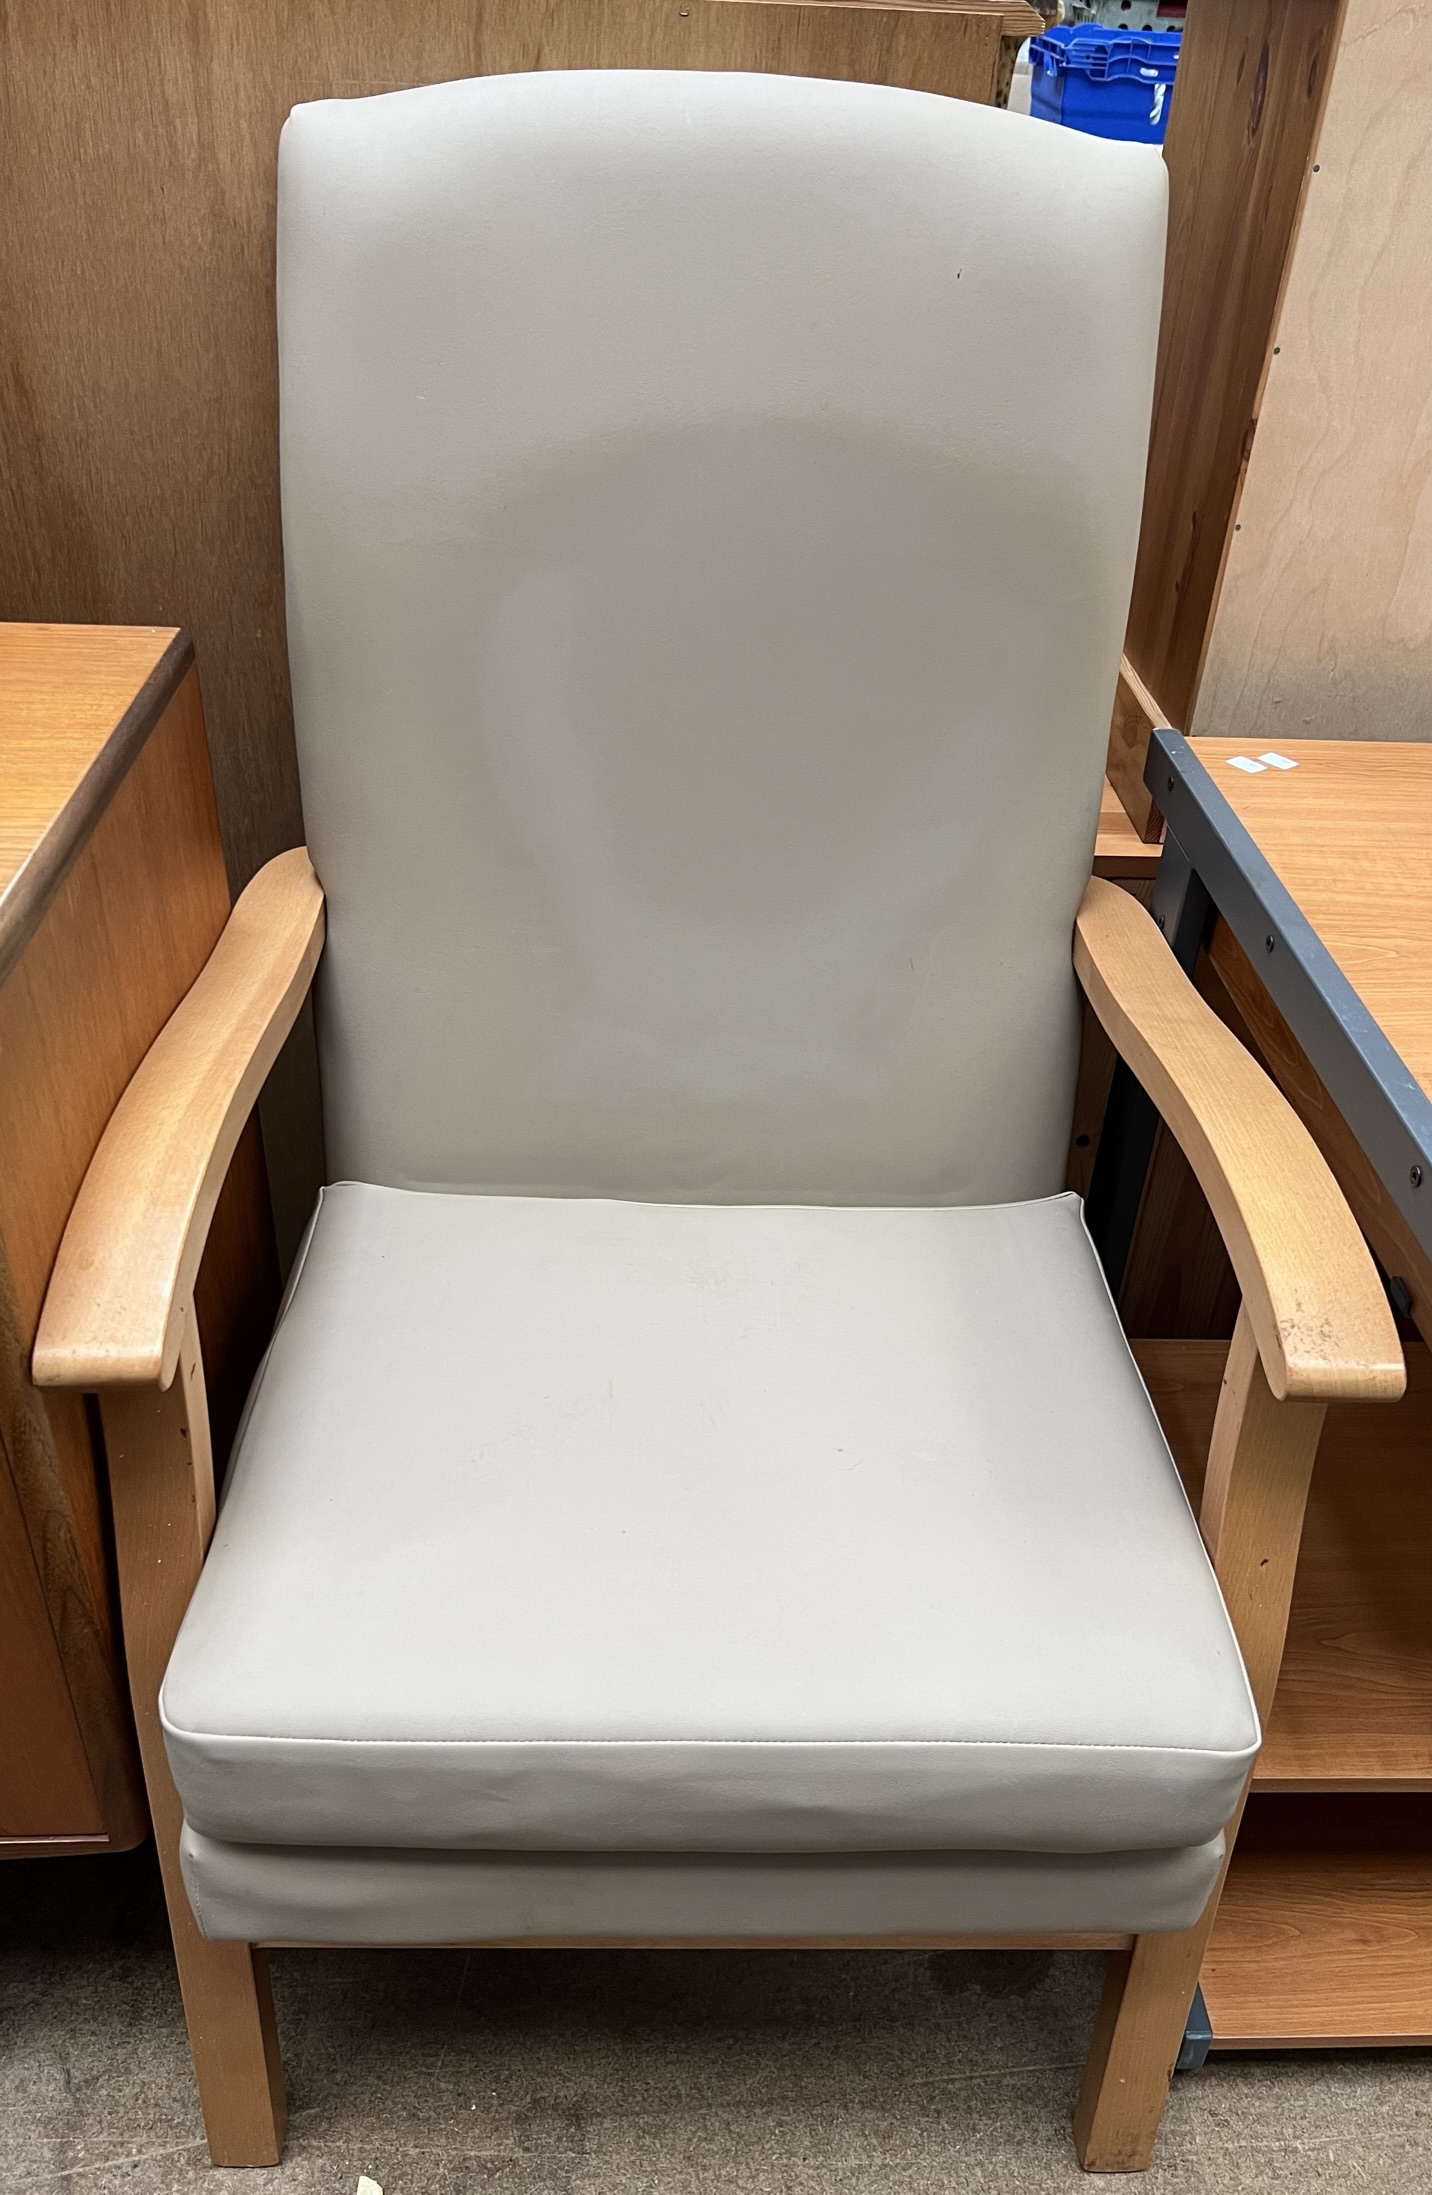 A beech framed upholstered high back elbow chair